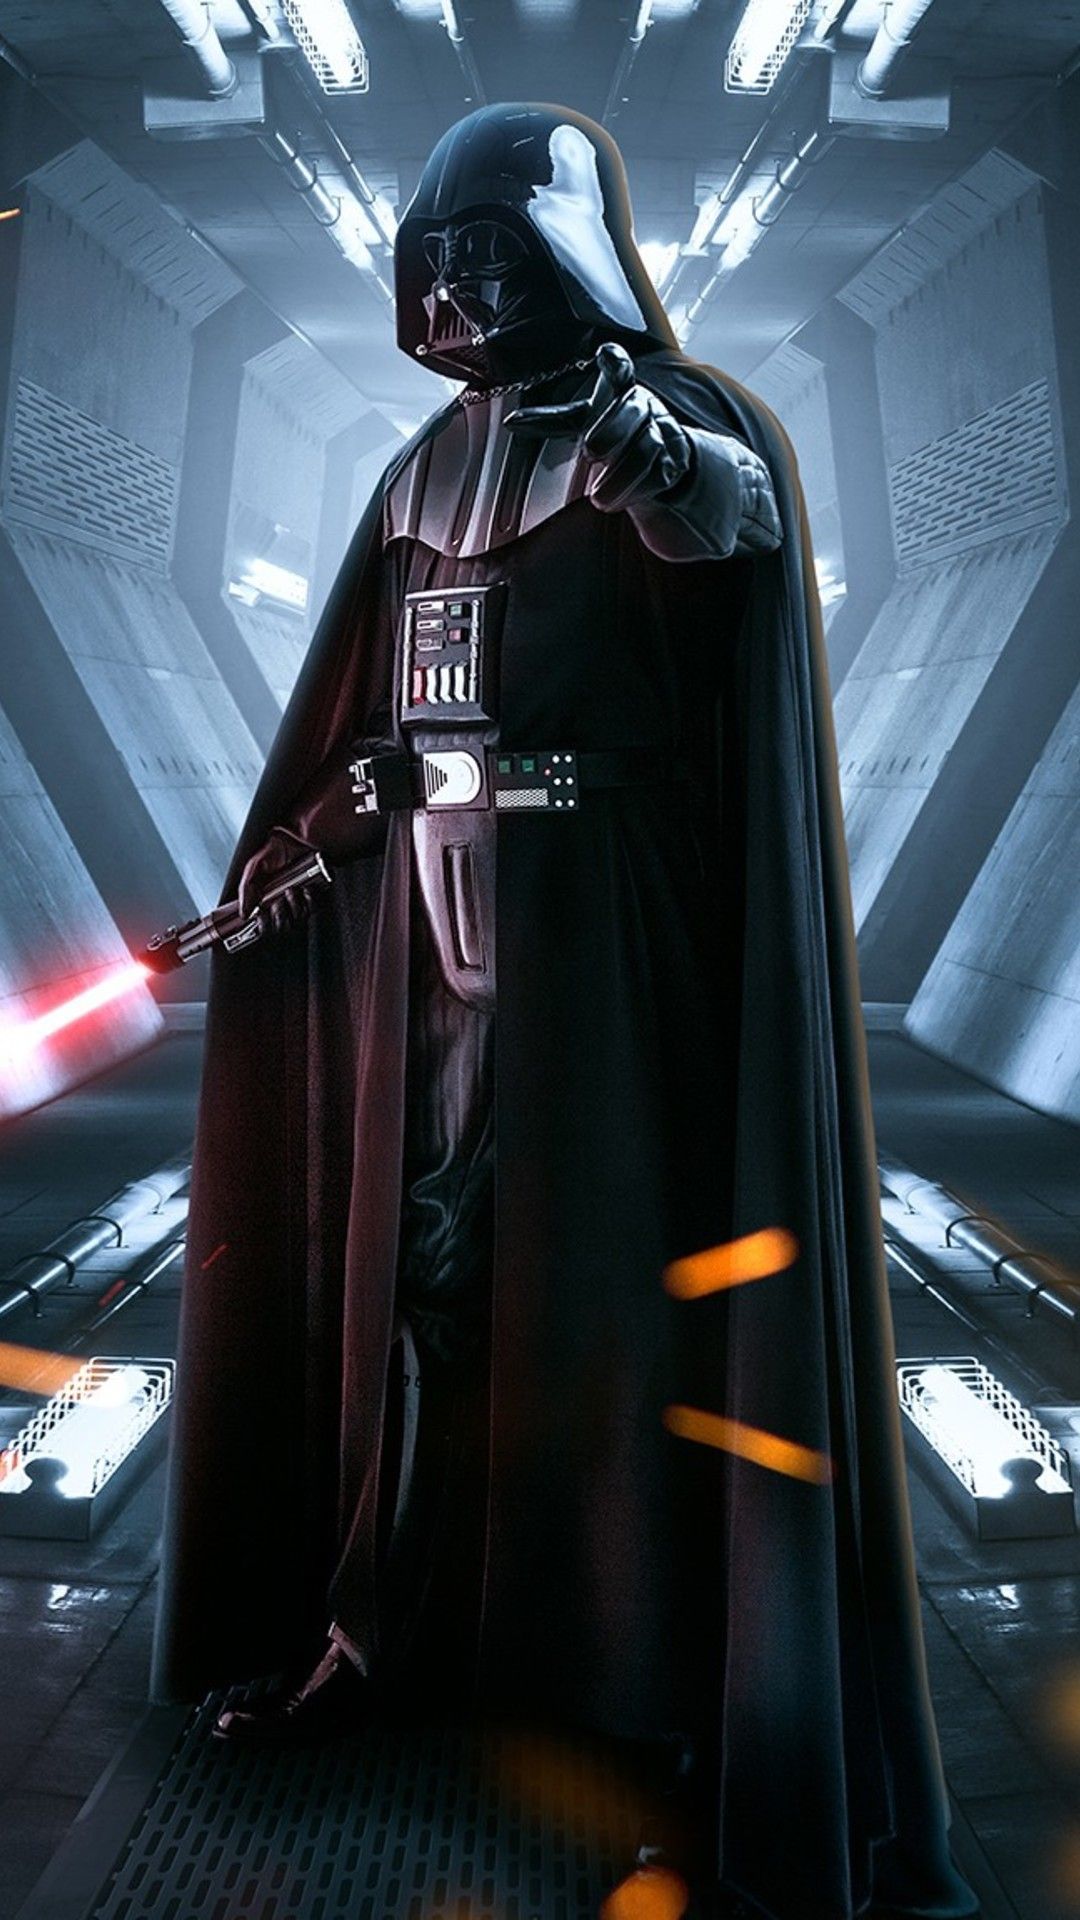 New Darth Vader I Wars Poster of Star Wars Poster - #starwars #posters #starwarsposter. Vader star wars, Star wars image, Star wars picture